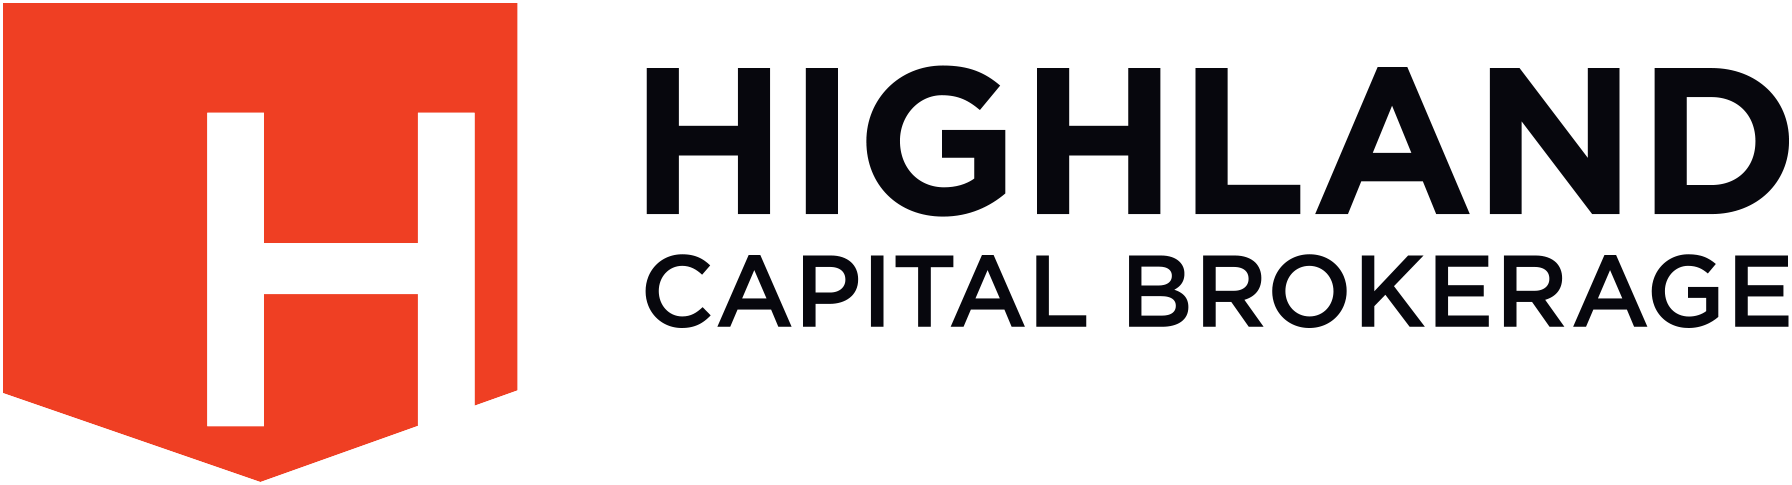 Highland Capital Brokerage logo